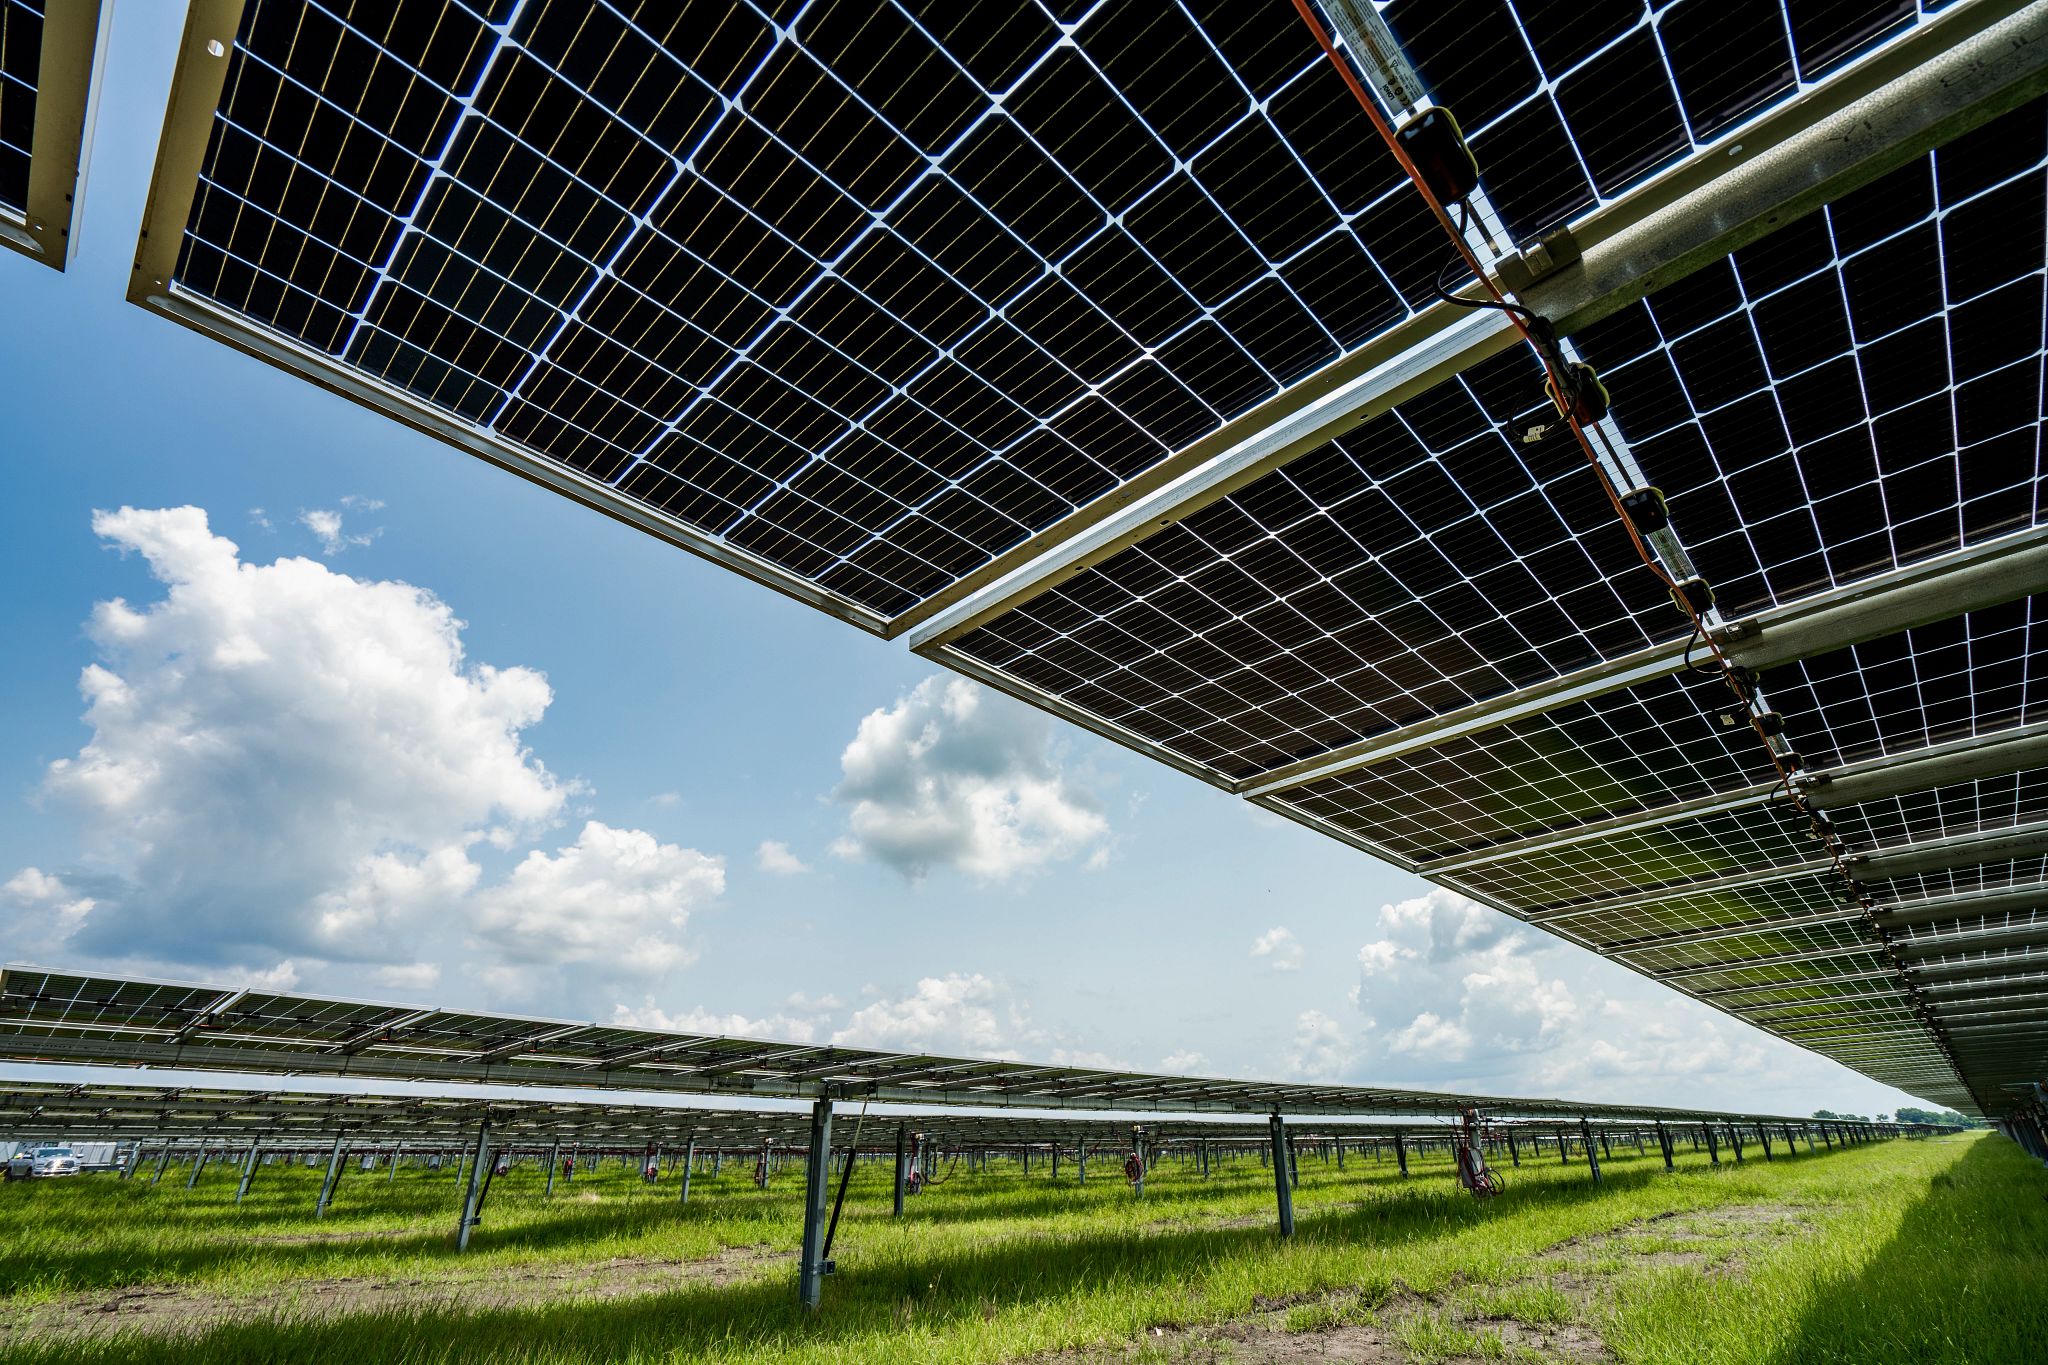 Solar panels in a green field under a blue sky